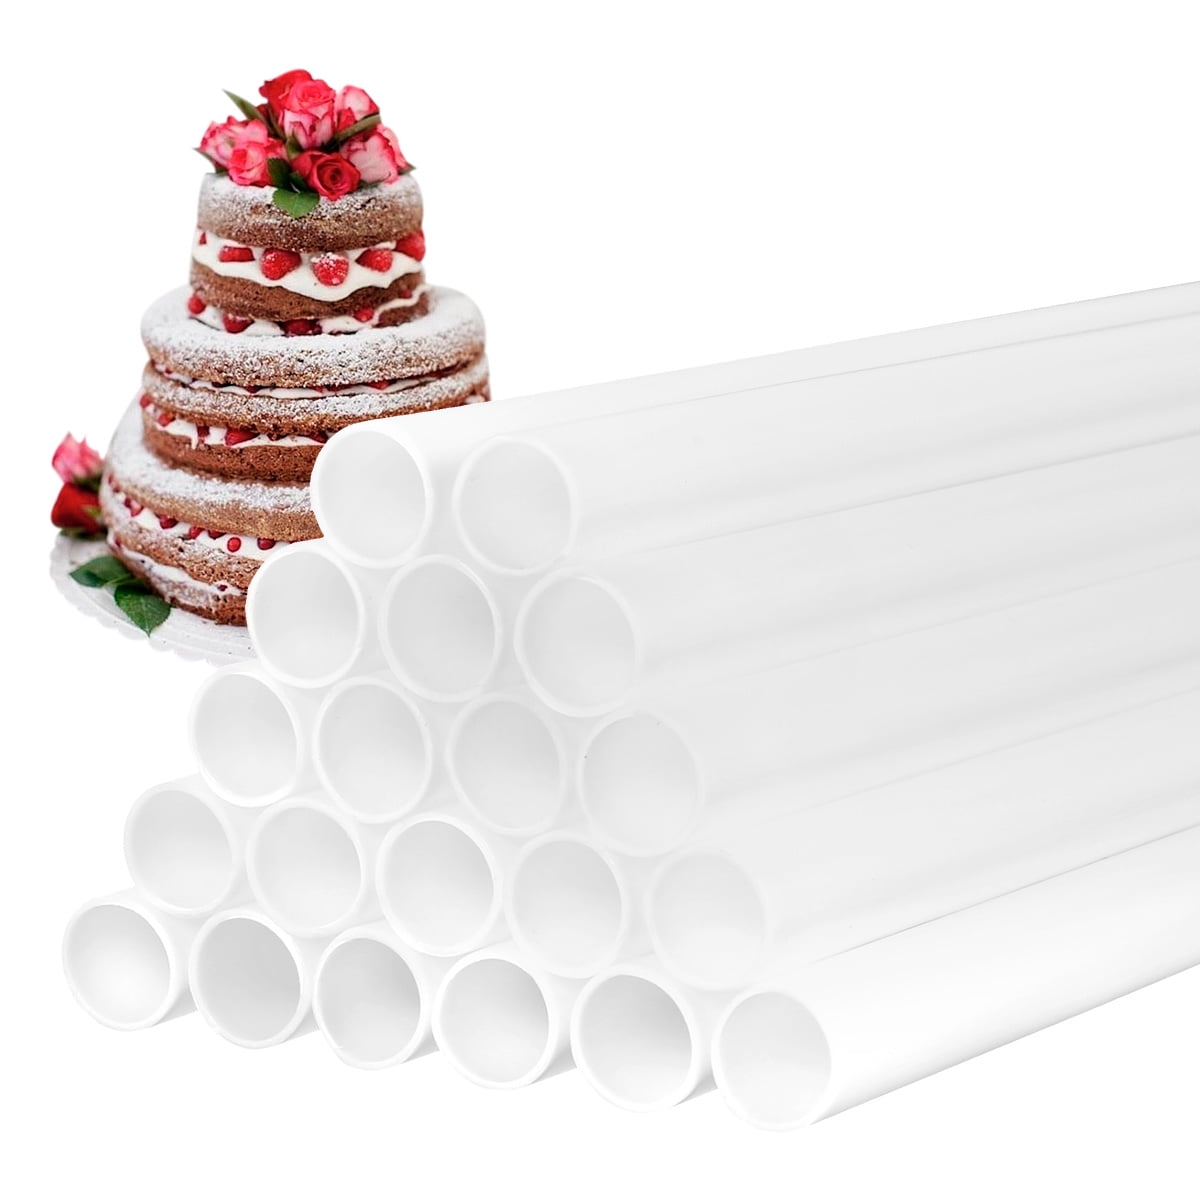  Ziliny 500 Pcs White Plastic Cake Dowel Rods 9.5 Inch